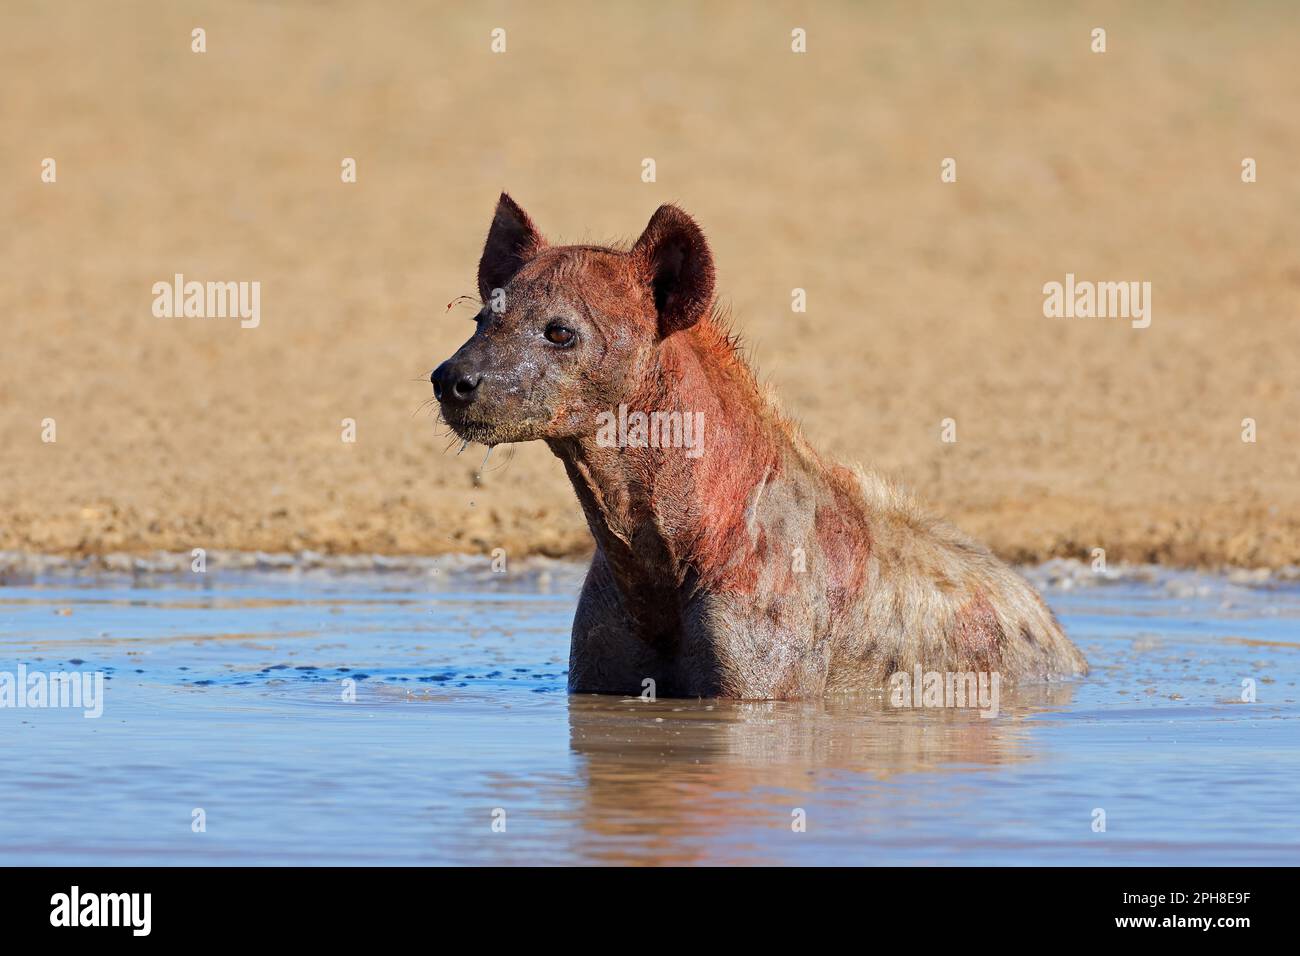 A blood covered spotted hyena (Crocuta crocuta) in shallow water, Kalahari desert, South Africa Stock Photo